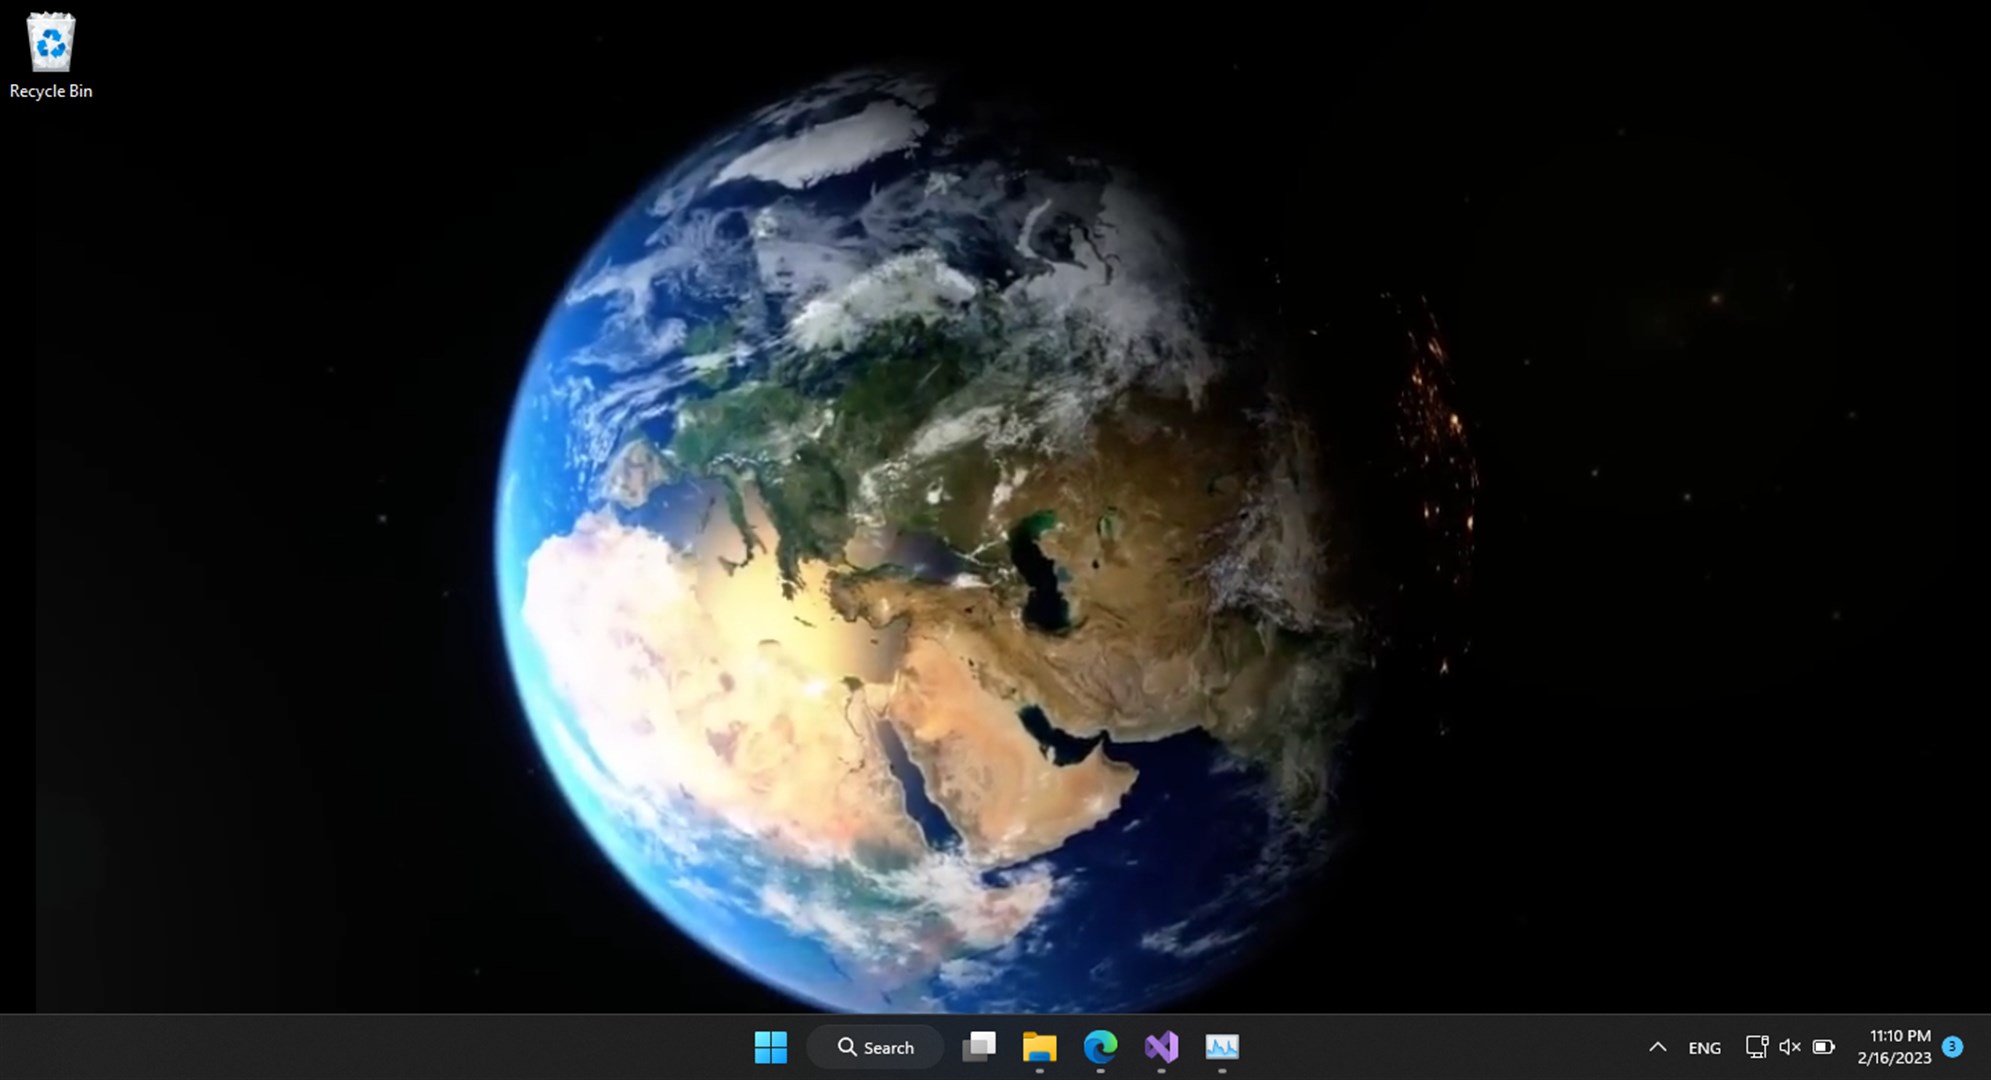 Desktop Live Wallpapers - Microsoft Apps